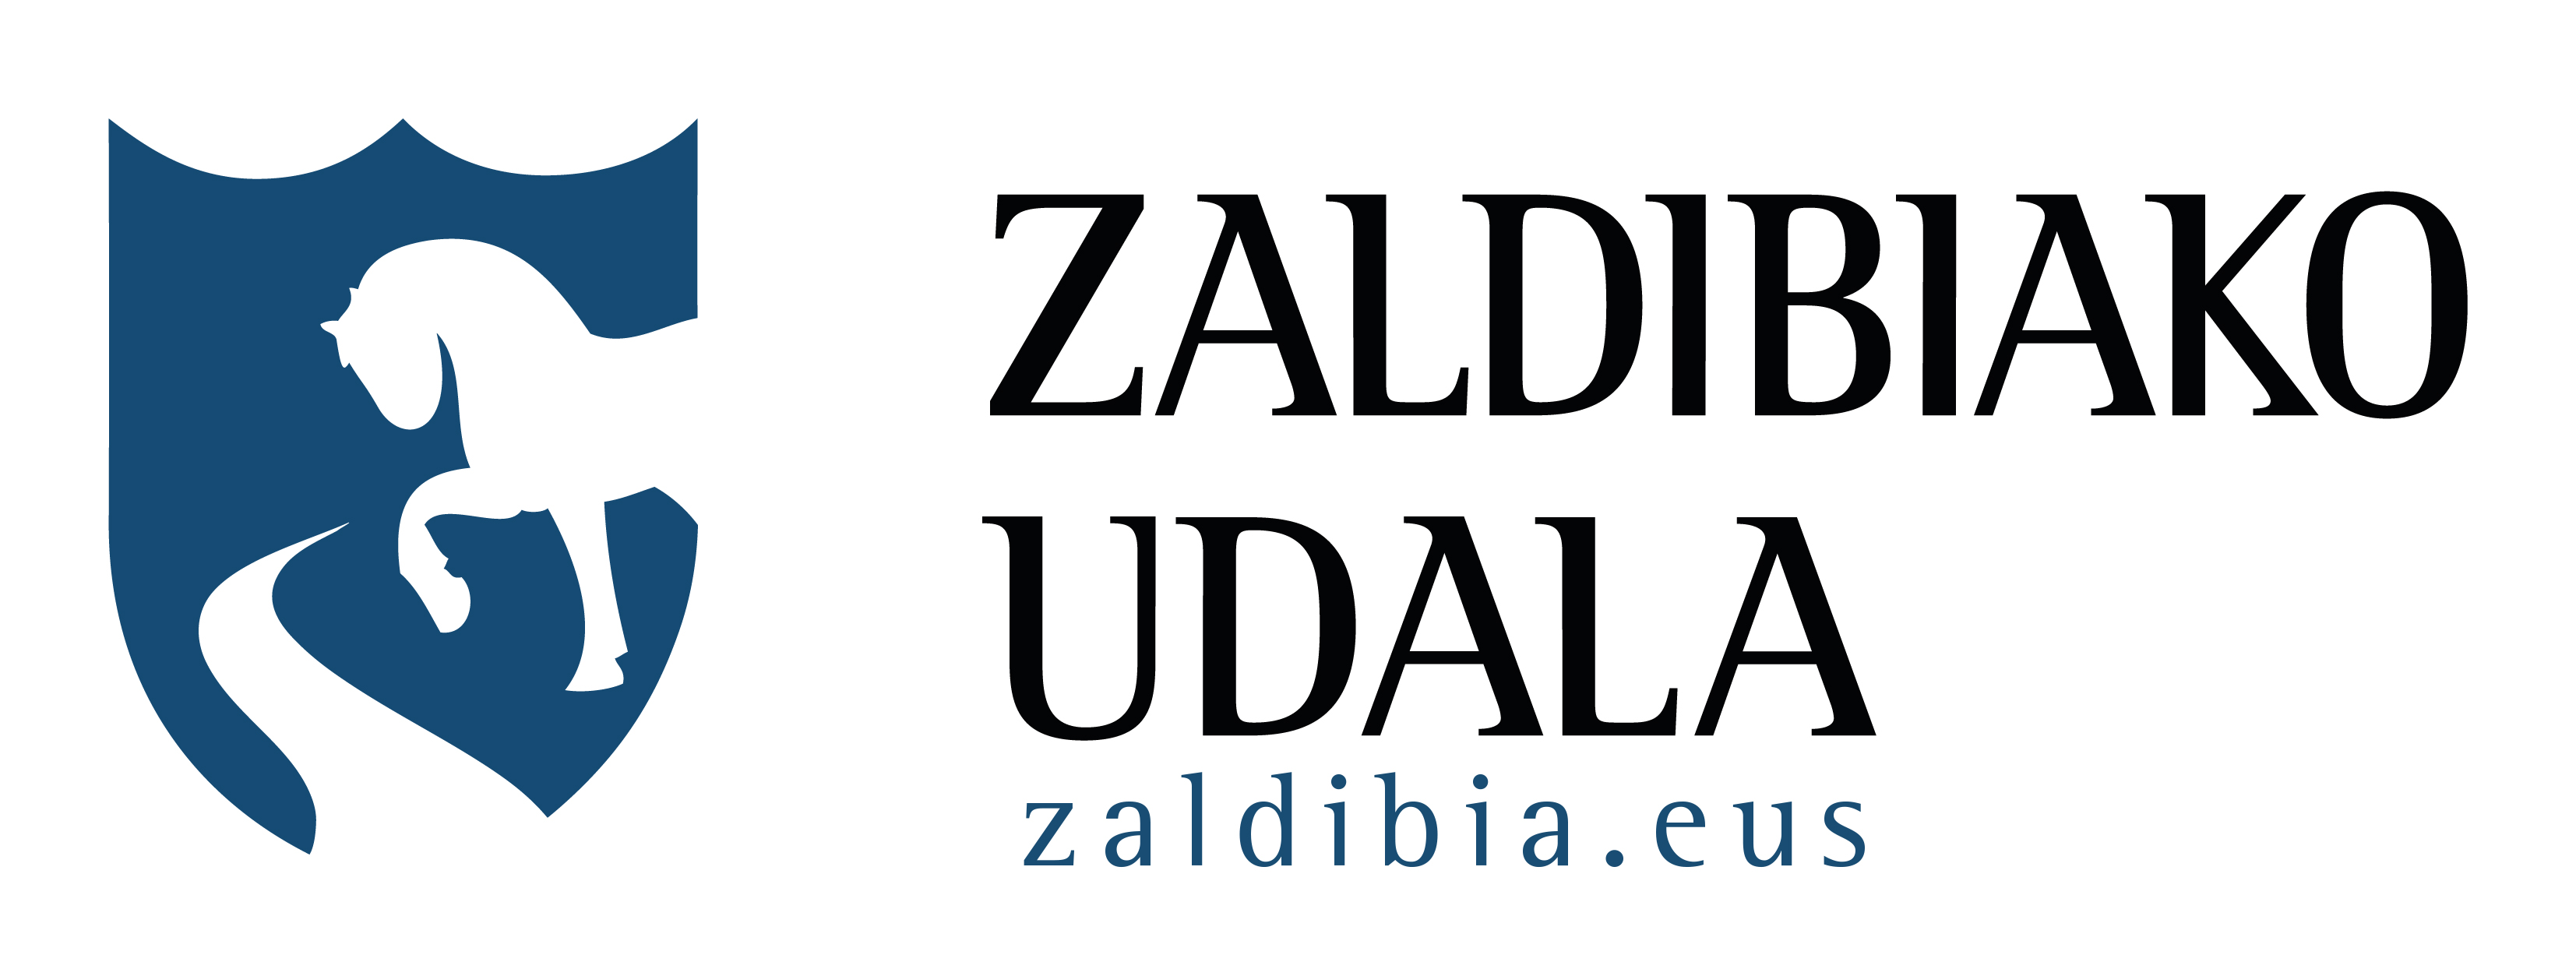 logo-ZALDIBIAKO UDALA horizontala.jpg